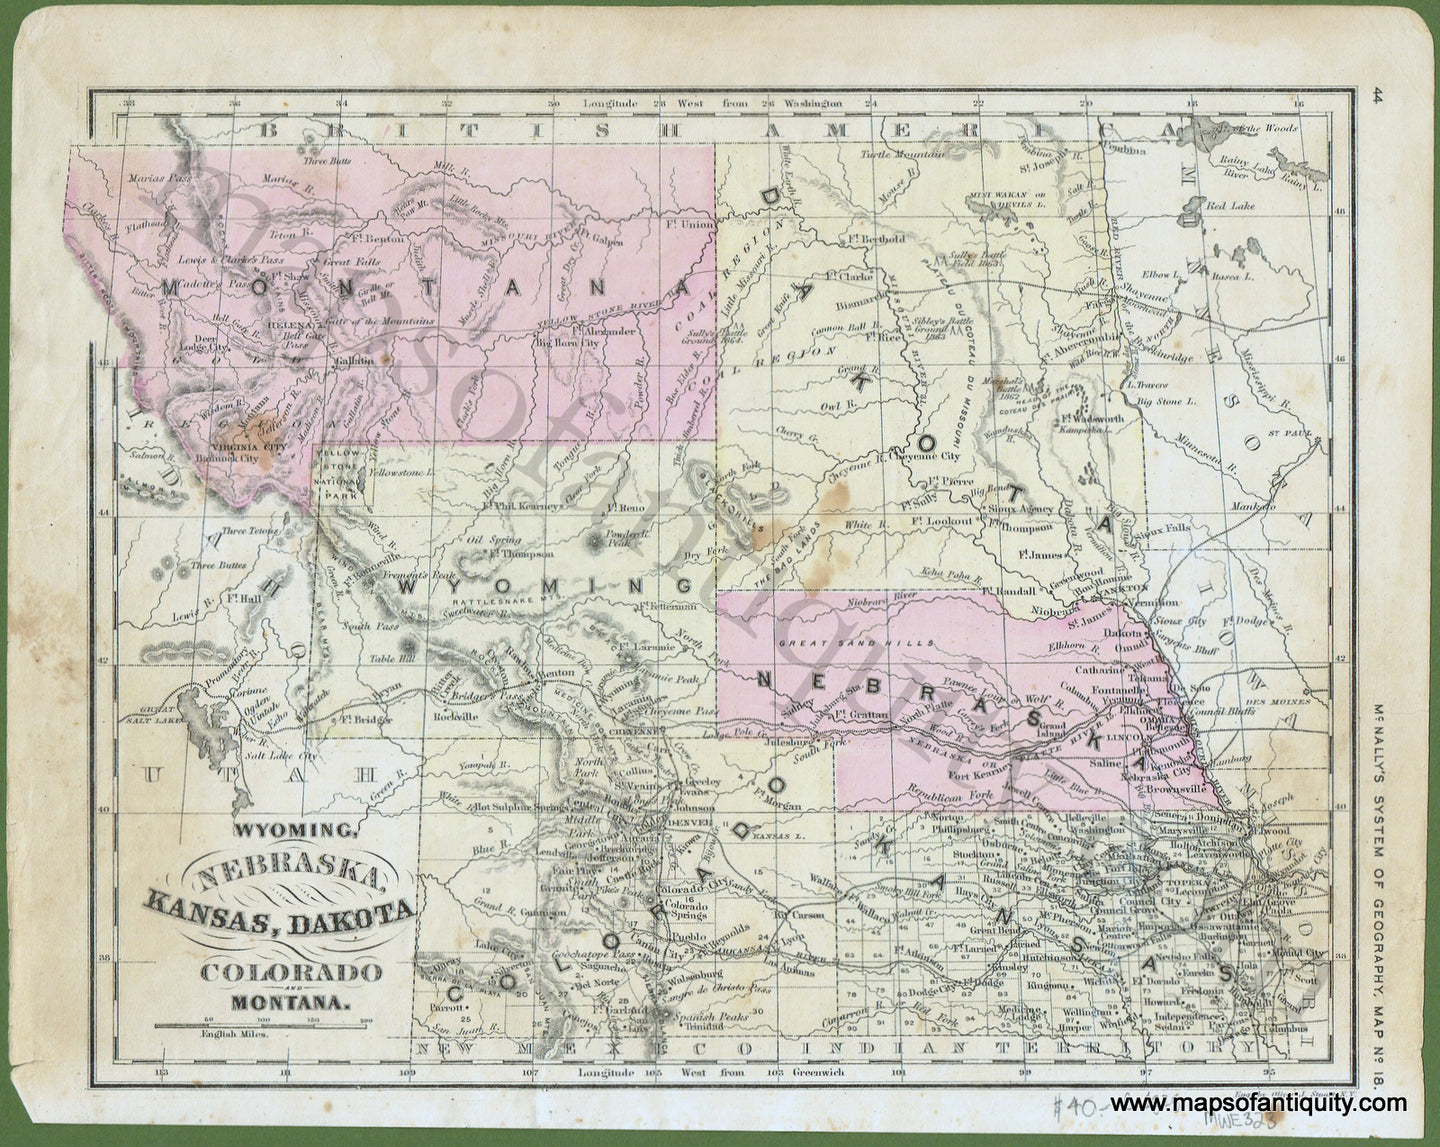 Antique-Hand-Colored-Map-Wyoming-Nebraska-Kansas-Dakota-Colorado-and-Montana.-United-States-Midwest-c.-1875-McNally-Maps-Of-Antiquity